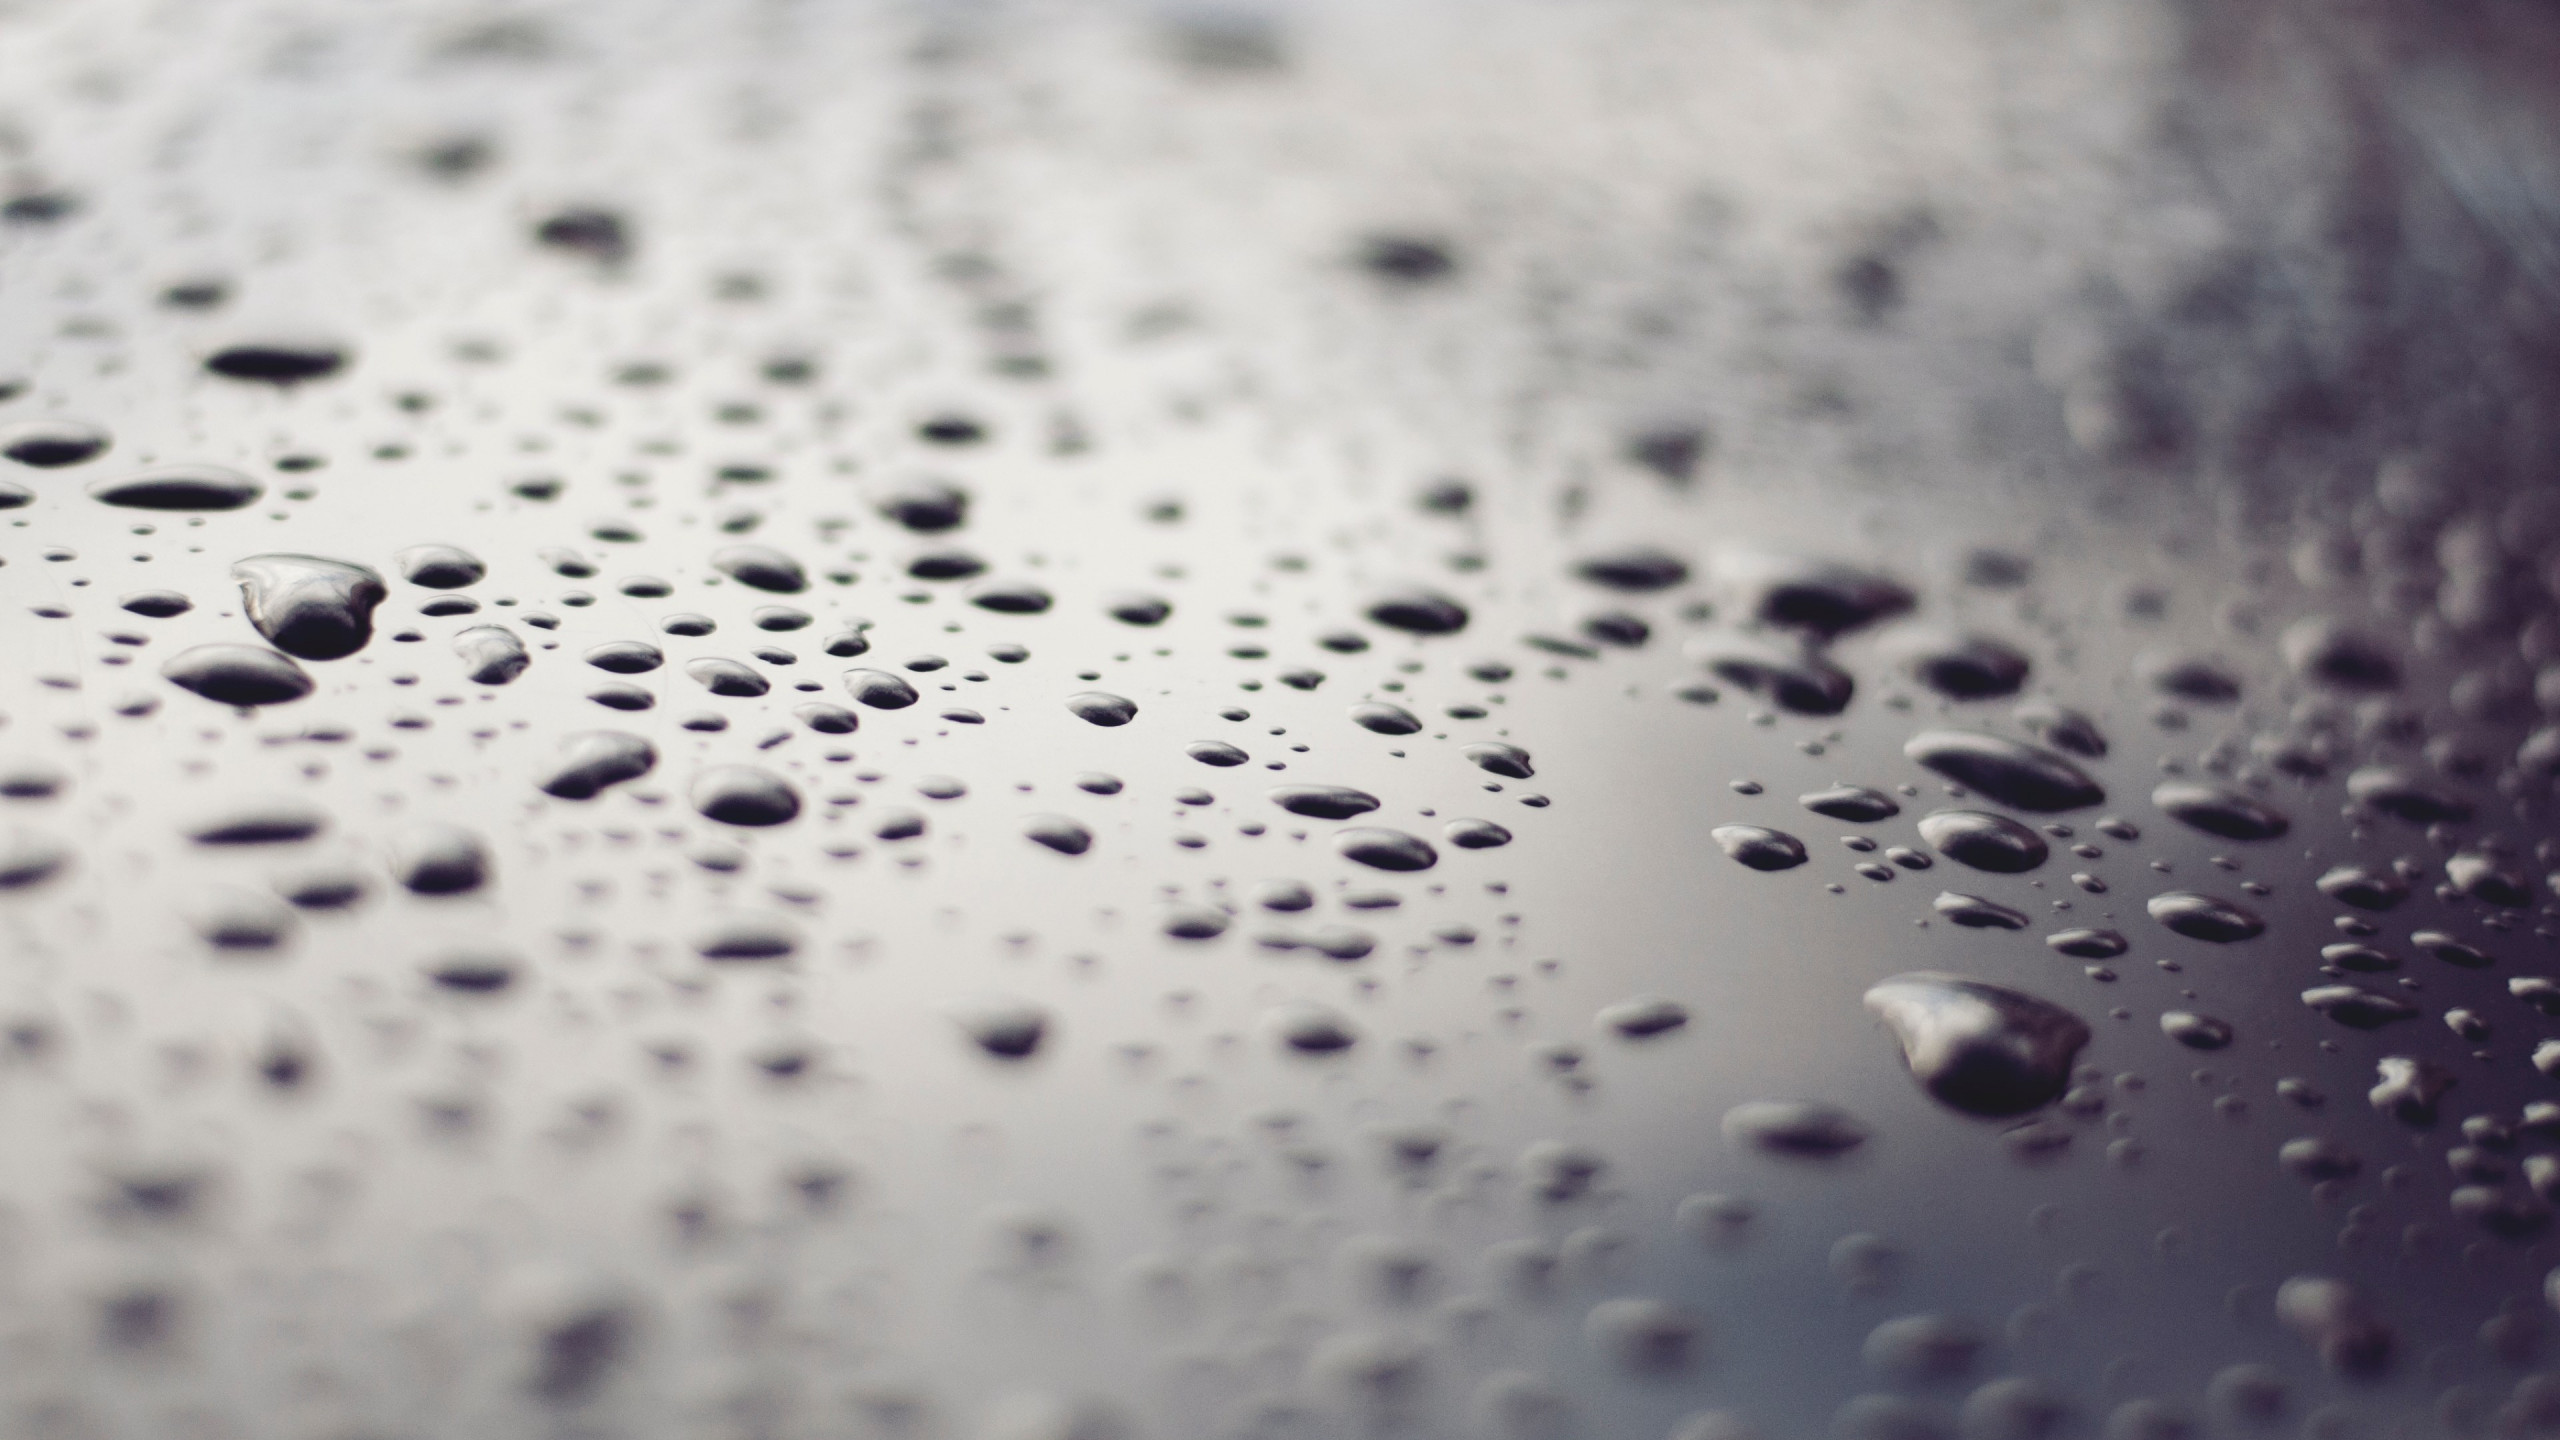 Raindrops on a metallic surface wallpaper 2560x1440